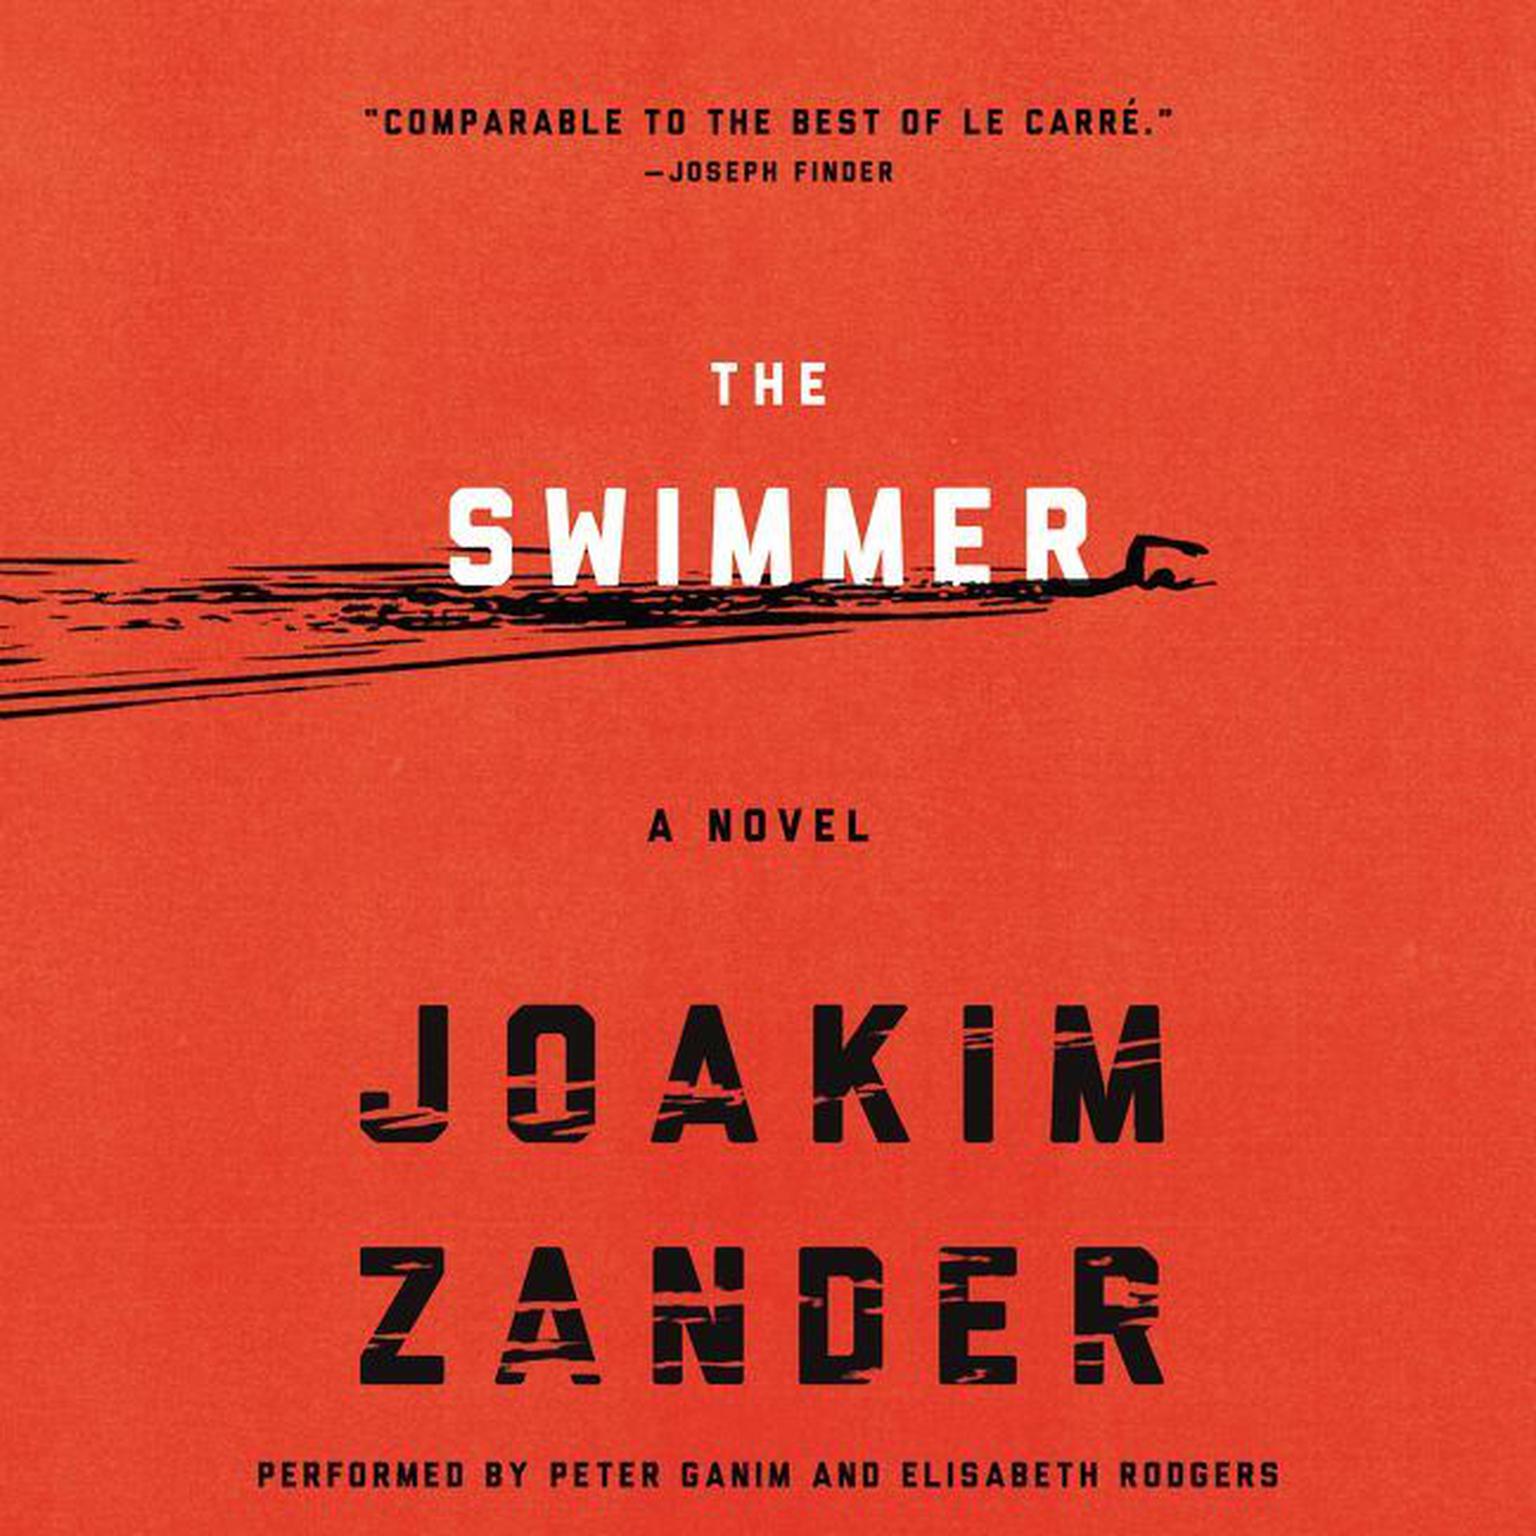 The Swimmer: A Novel Audiobook, by Joakim Zander